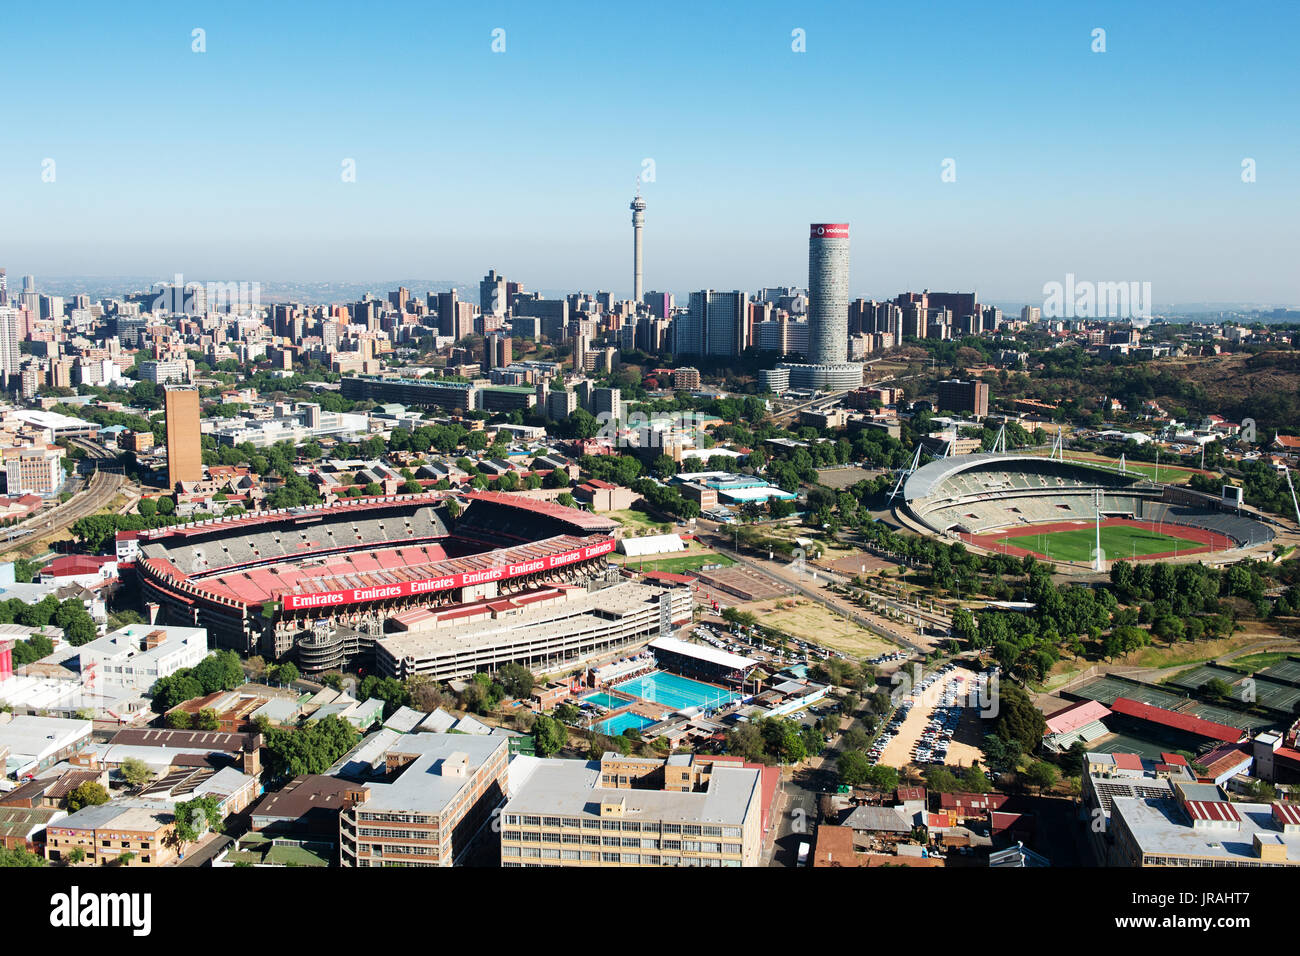 JOHANNESBURG, SOUTH AFRICA - September 24, 2016: Aerial view of the Johannesburg city skyline Stock Photo